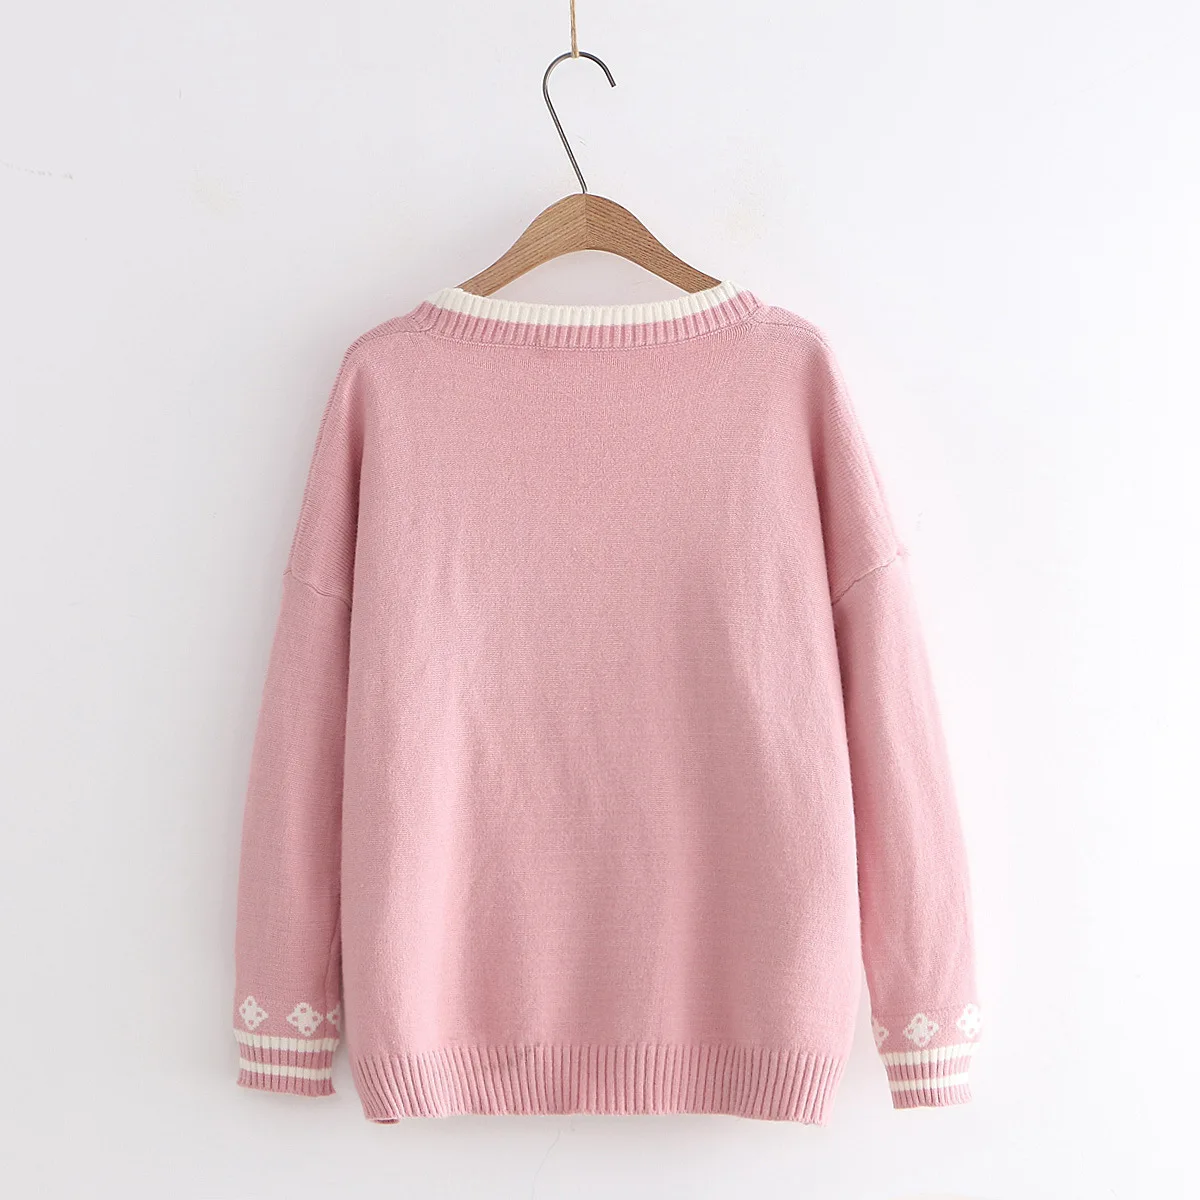 Kawaii Bunny Pastel Harajuku Sweater - Special Edition